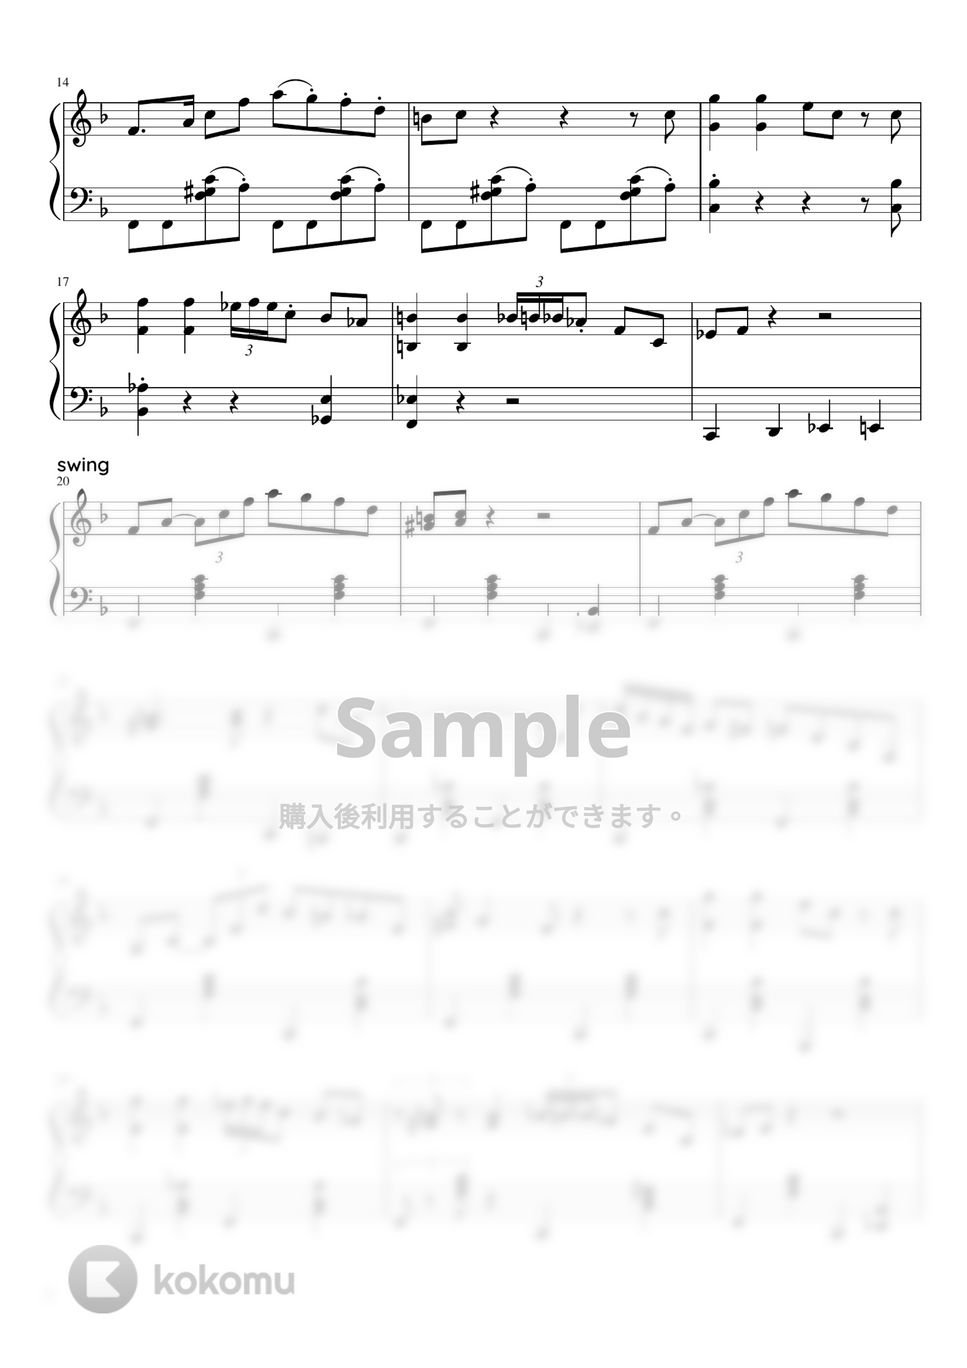 Henry Mancini - Baby Elephant Walk (jazz solo ver.) by hellobluejoy